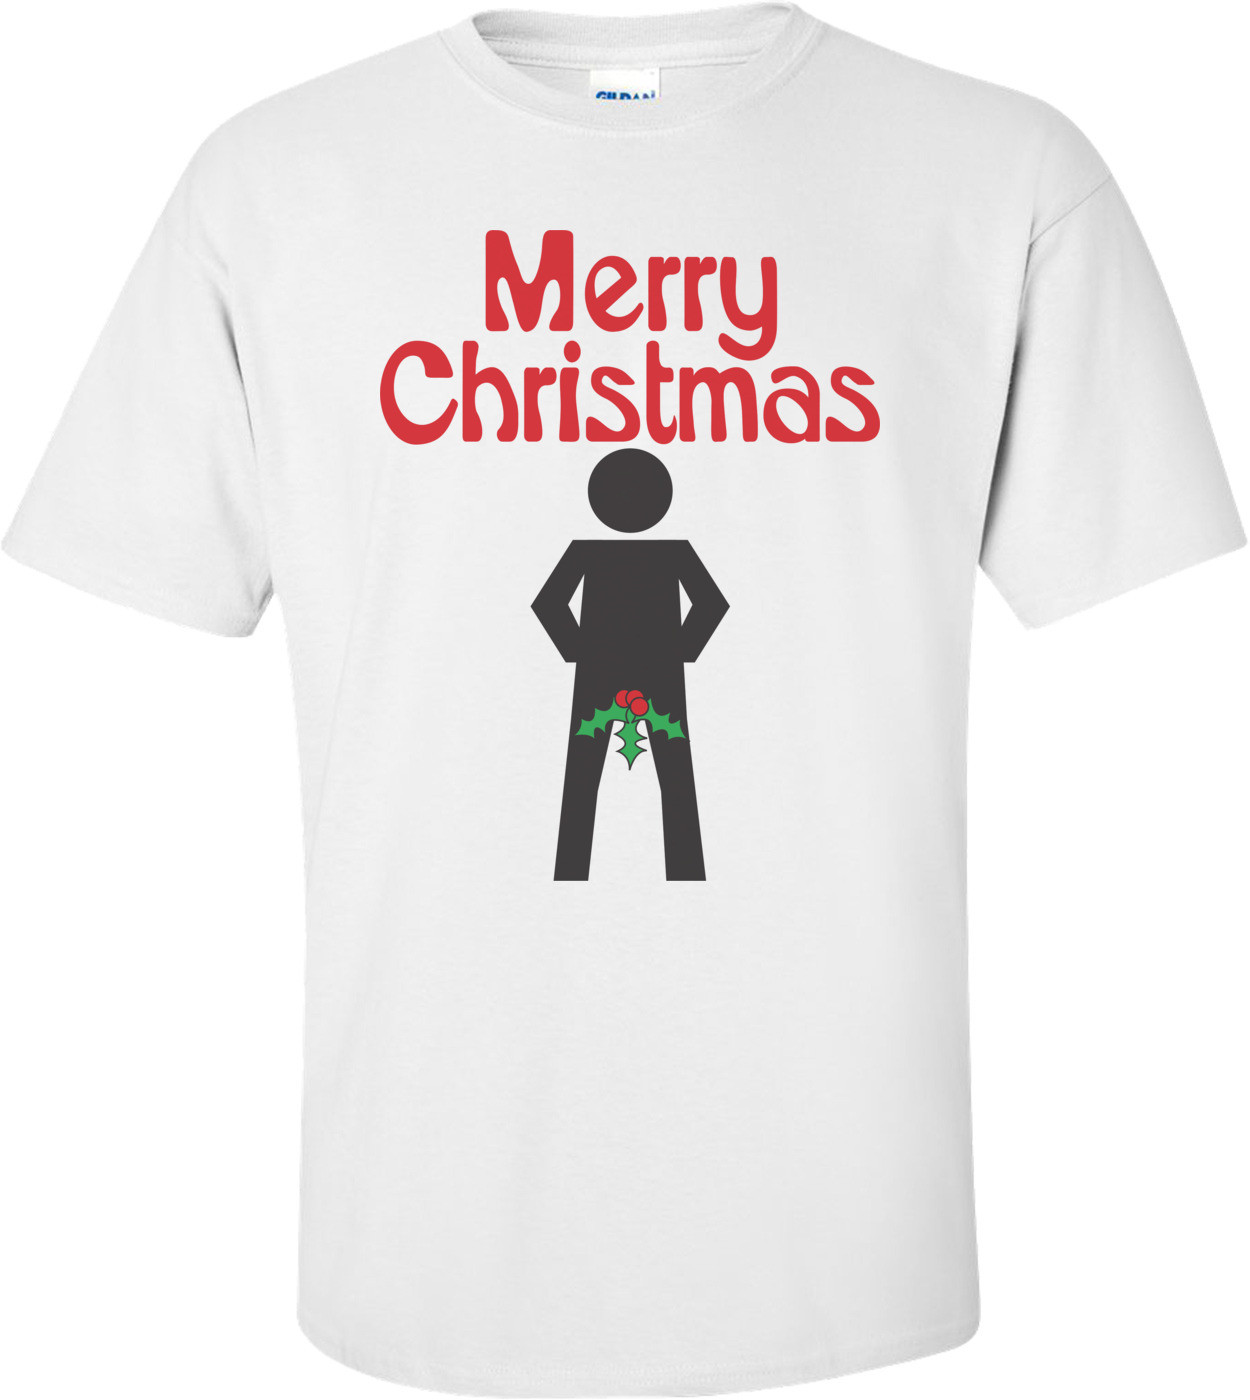 Merry Christmas T-shirt 